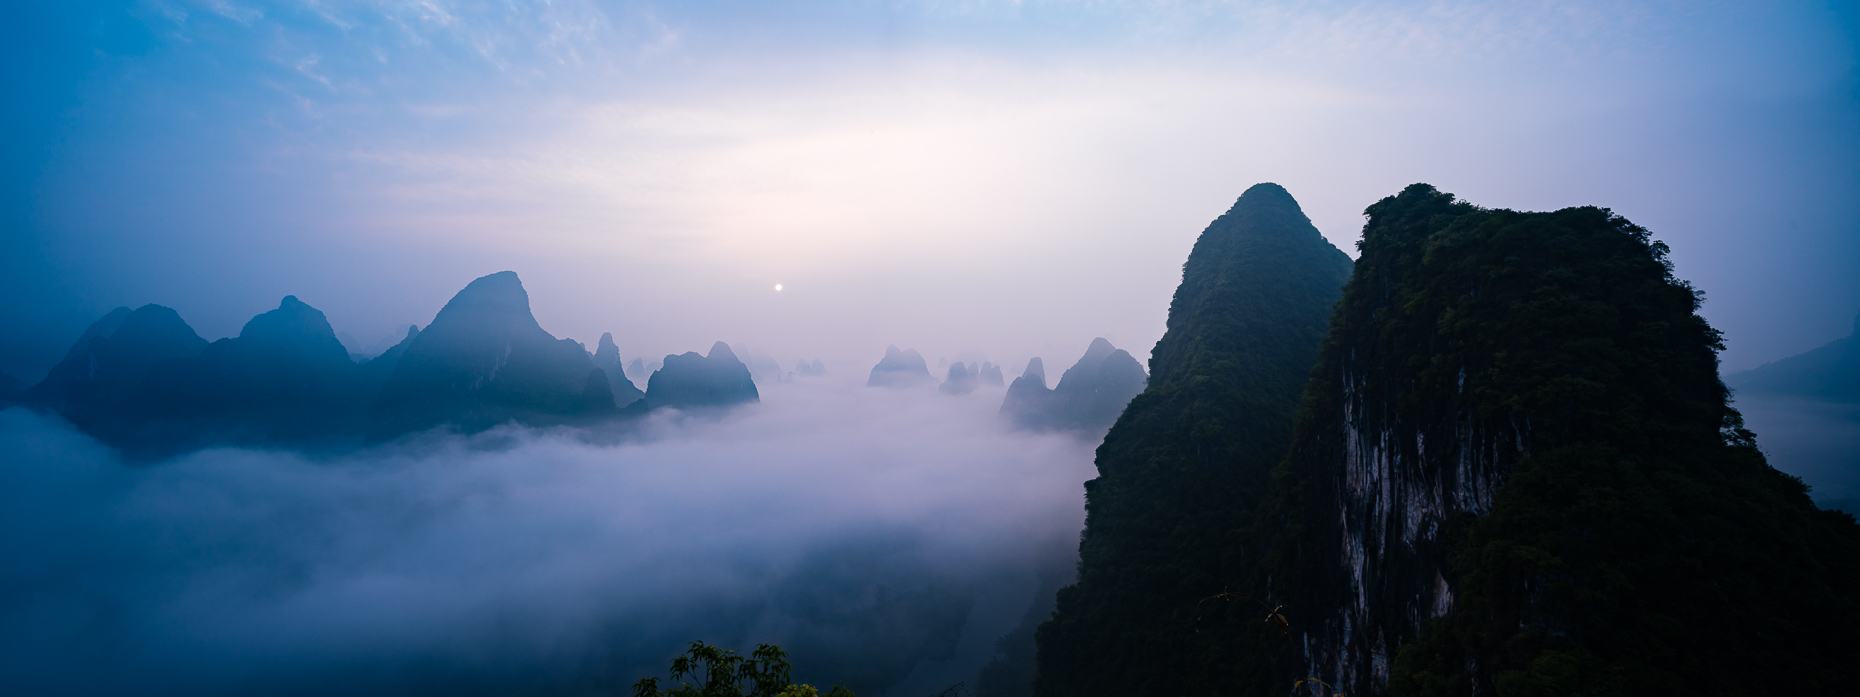 panoramic-guilin-dawn-landscape-mist-china-04